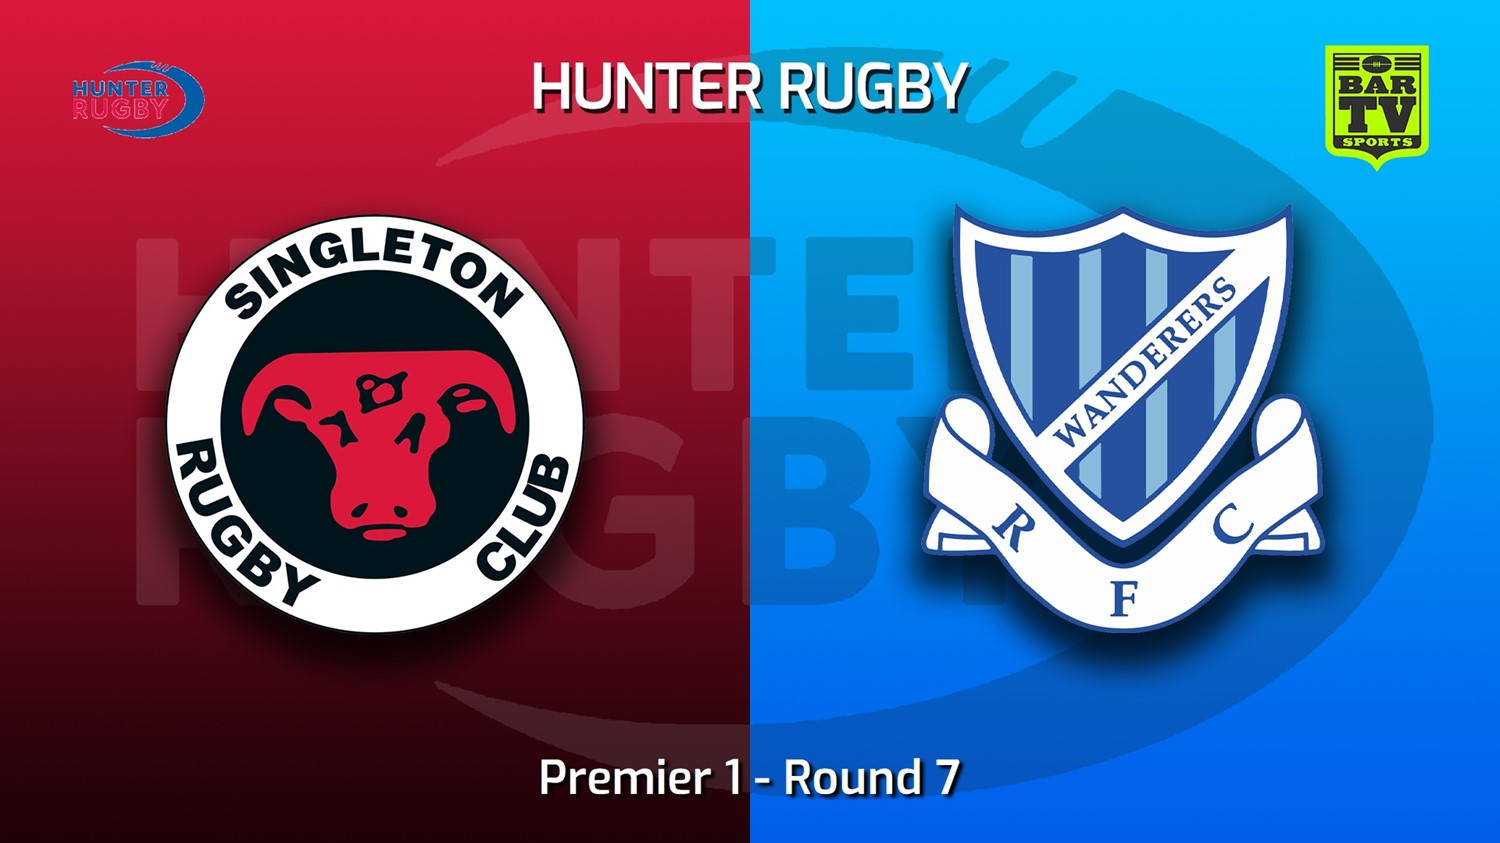 220621-Hunter Rugby Round 7 - Premier 1 - Singleton Bulls v Wanderers Slate Image